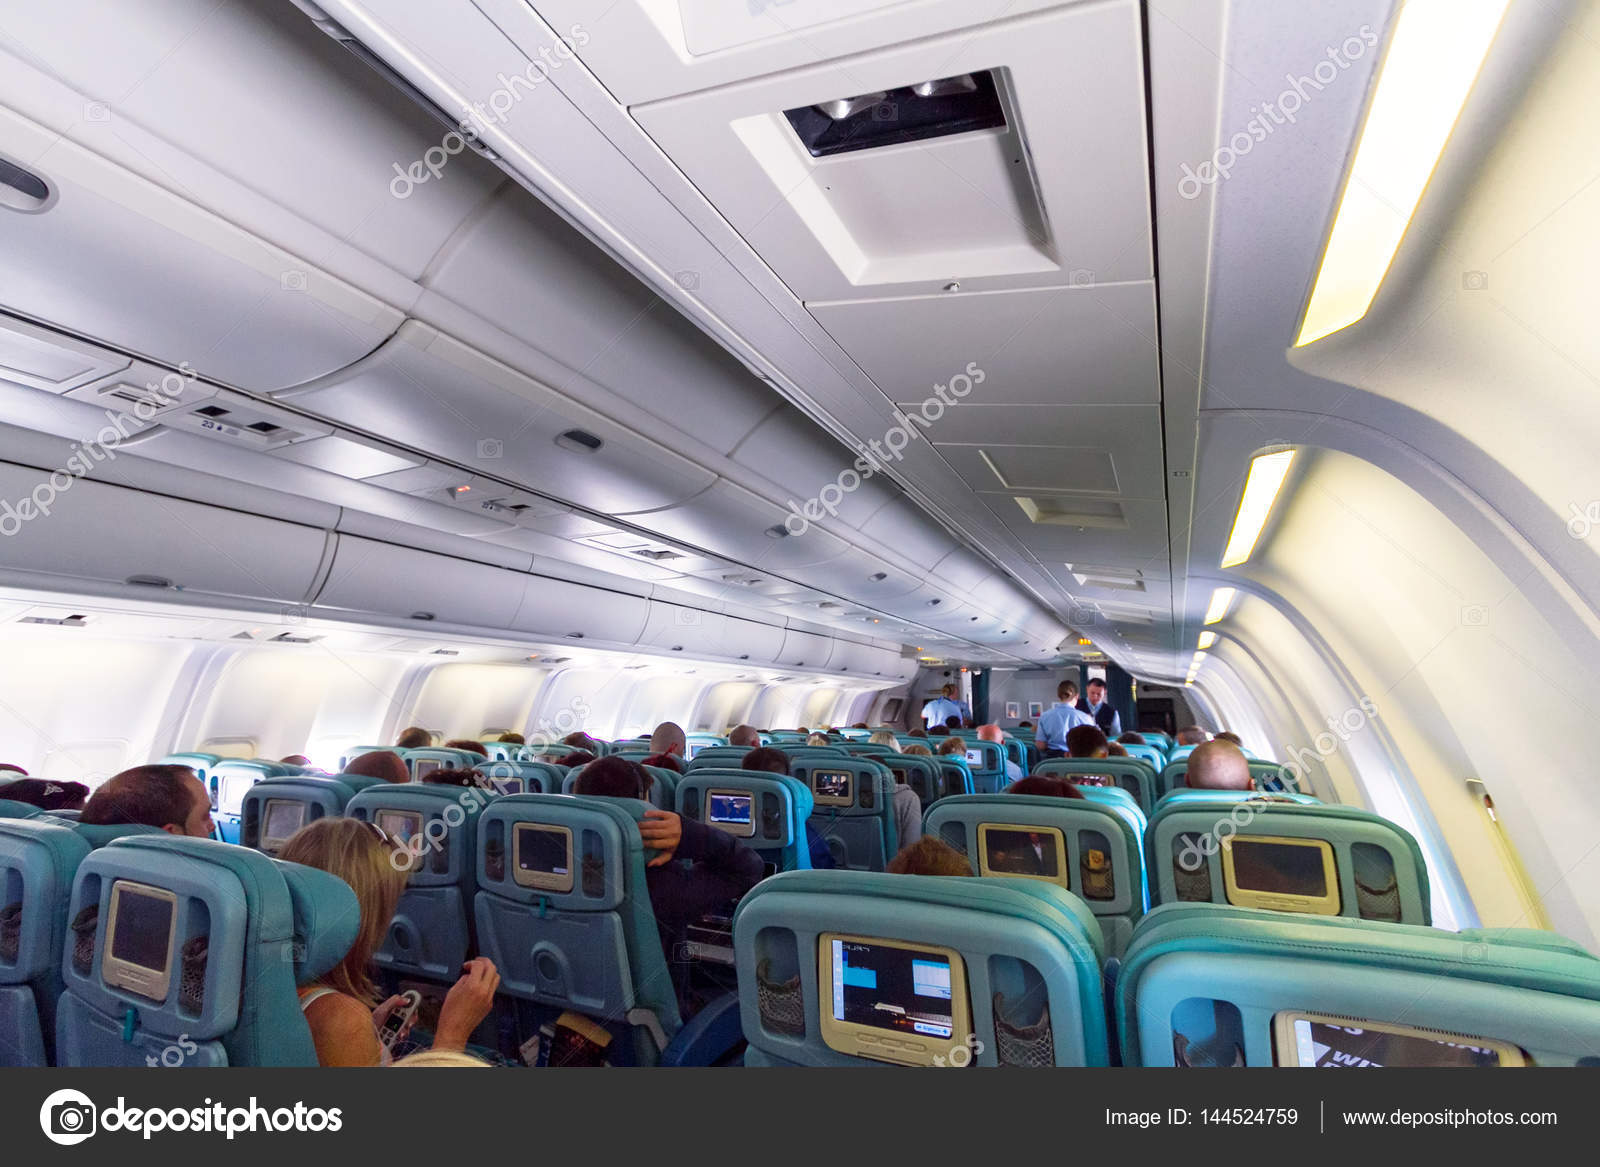 depositphotos 144524759 stock photo interior of boeing 767 during